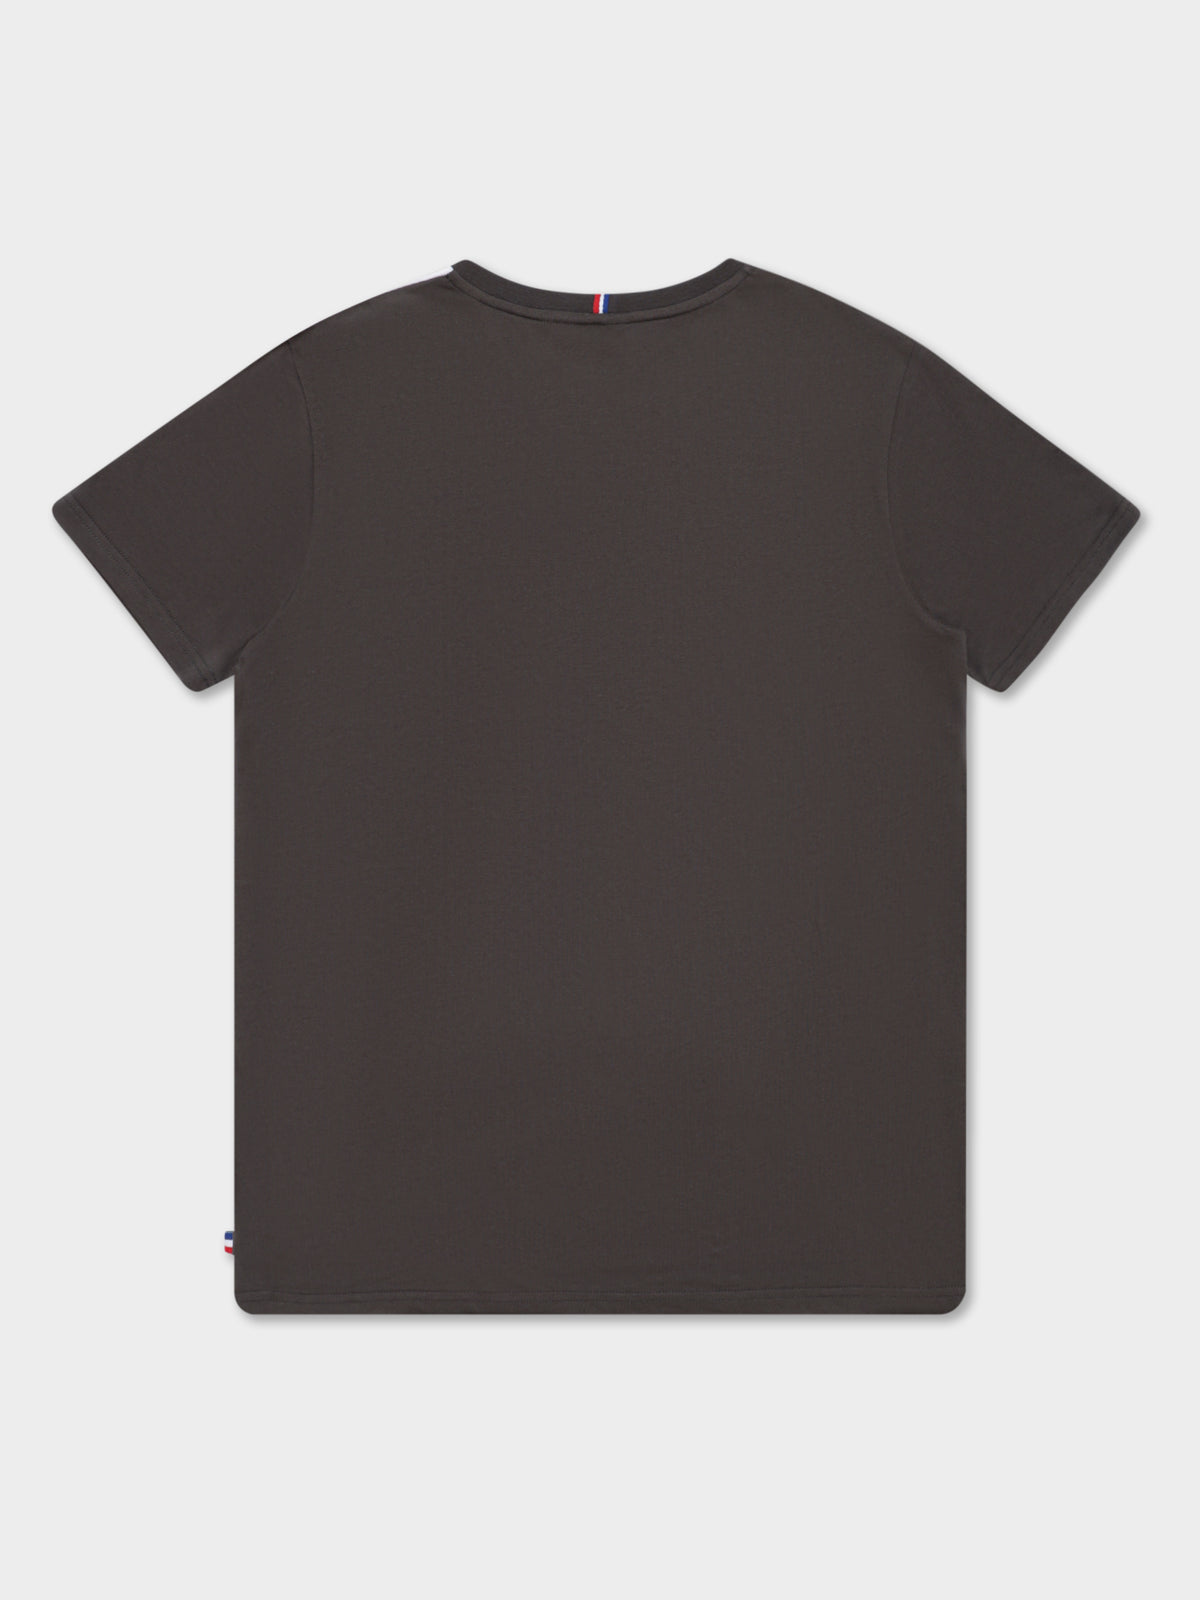 LCS Script T-Shirt in Carbon